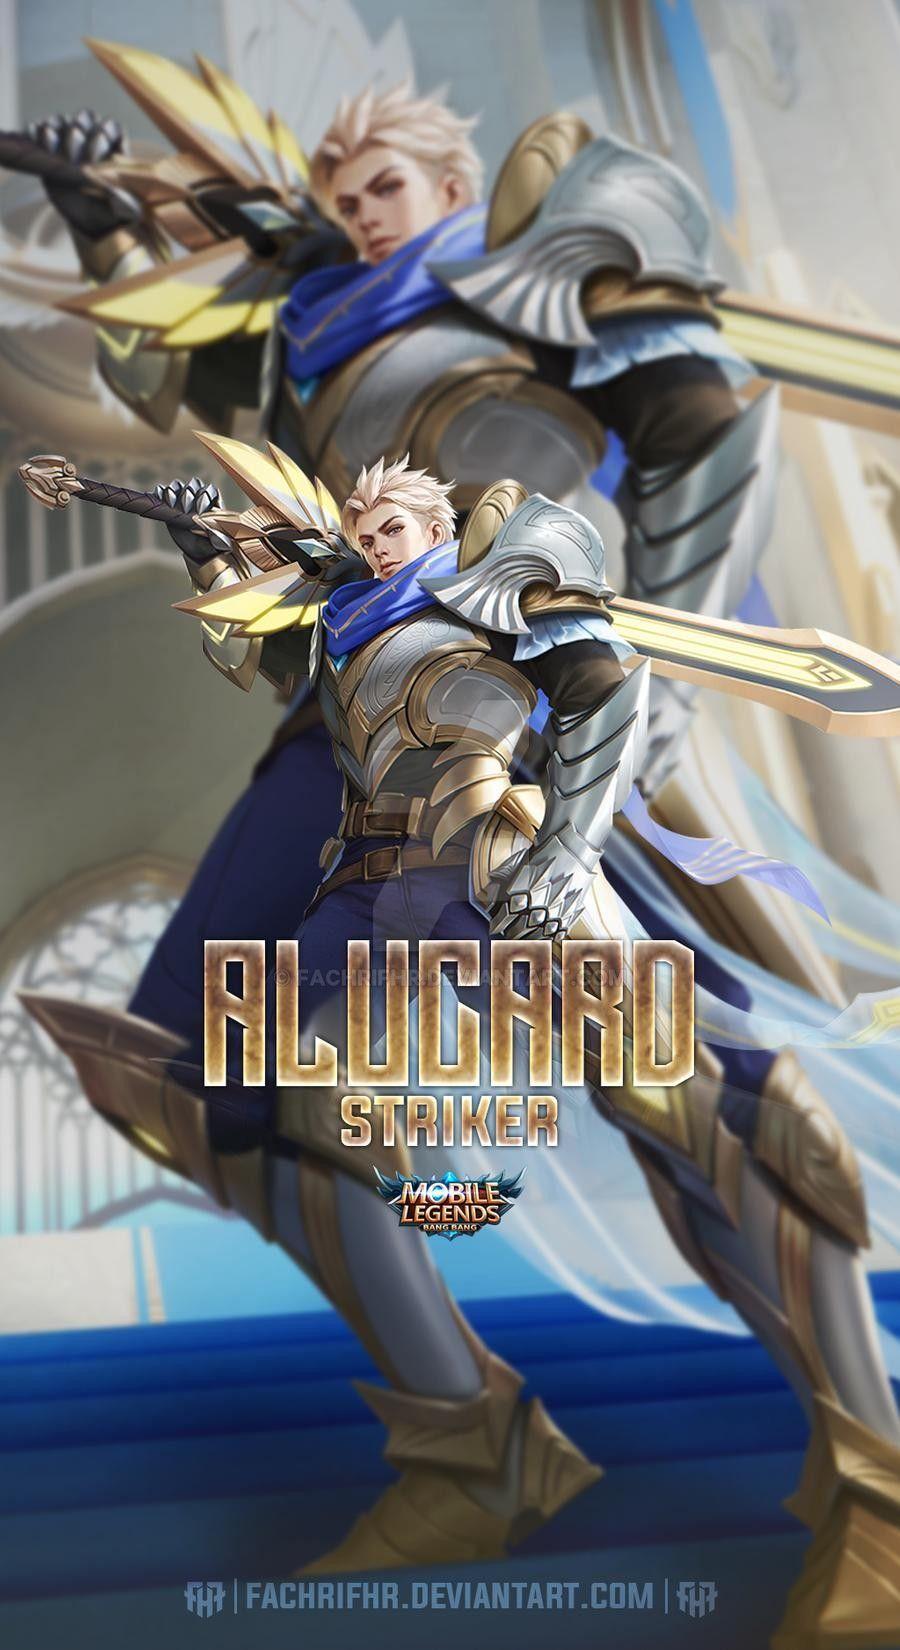 Alucard Lightborn Striker. Alucard mobile legends, Mobile legends, Alucard